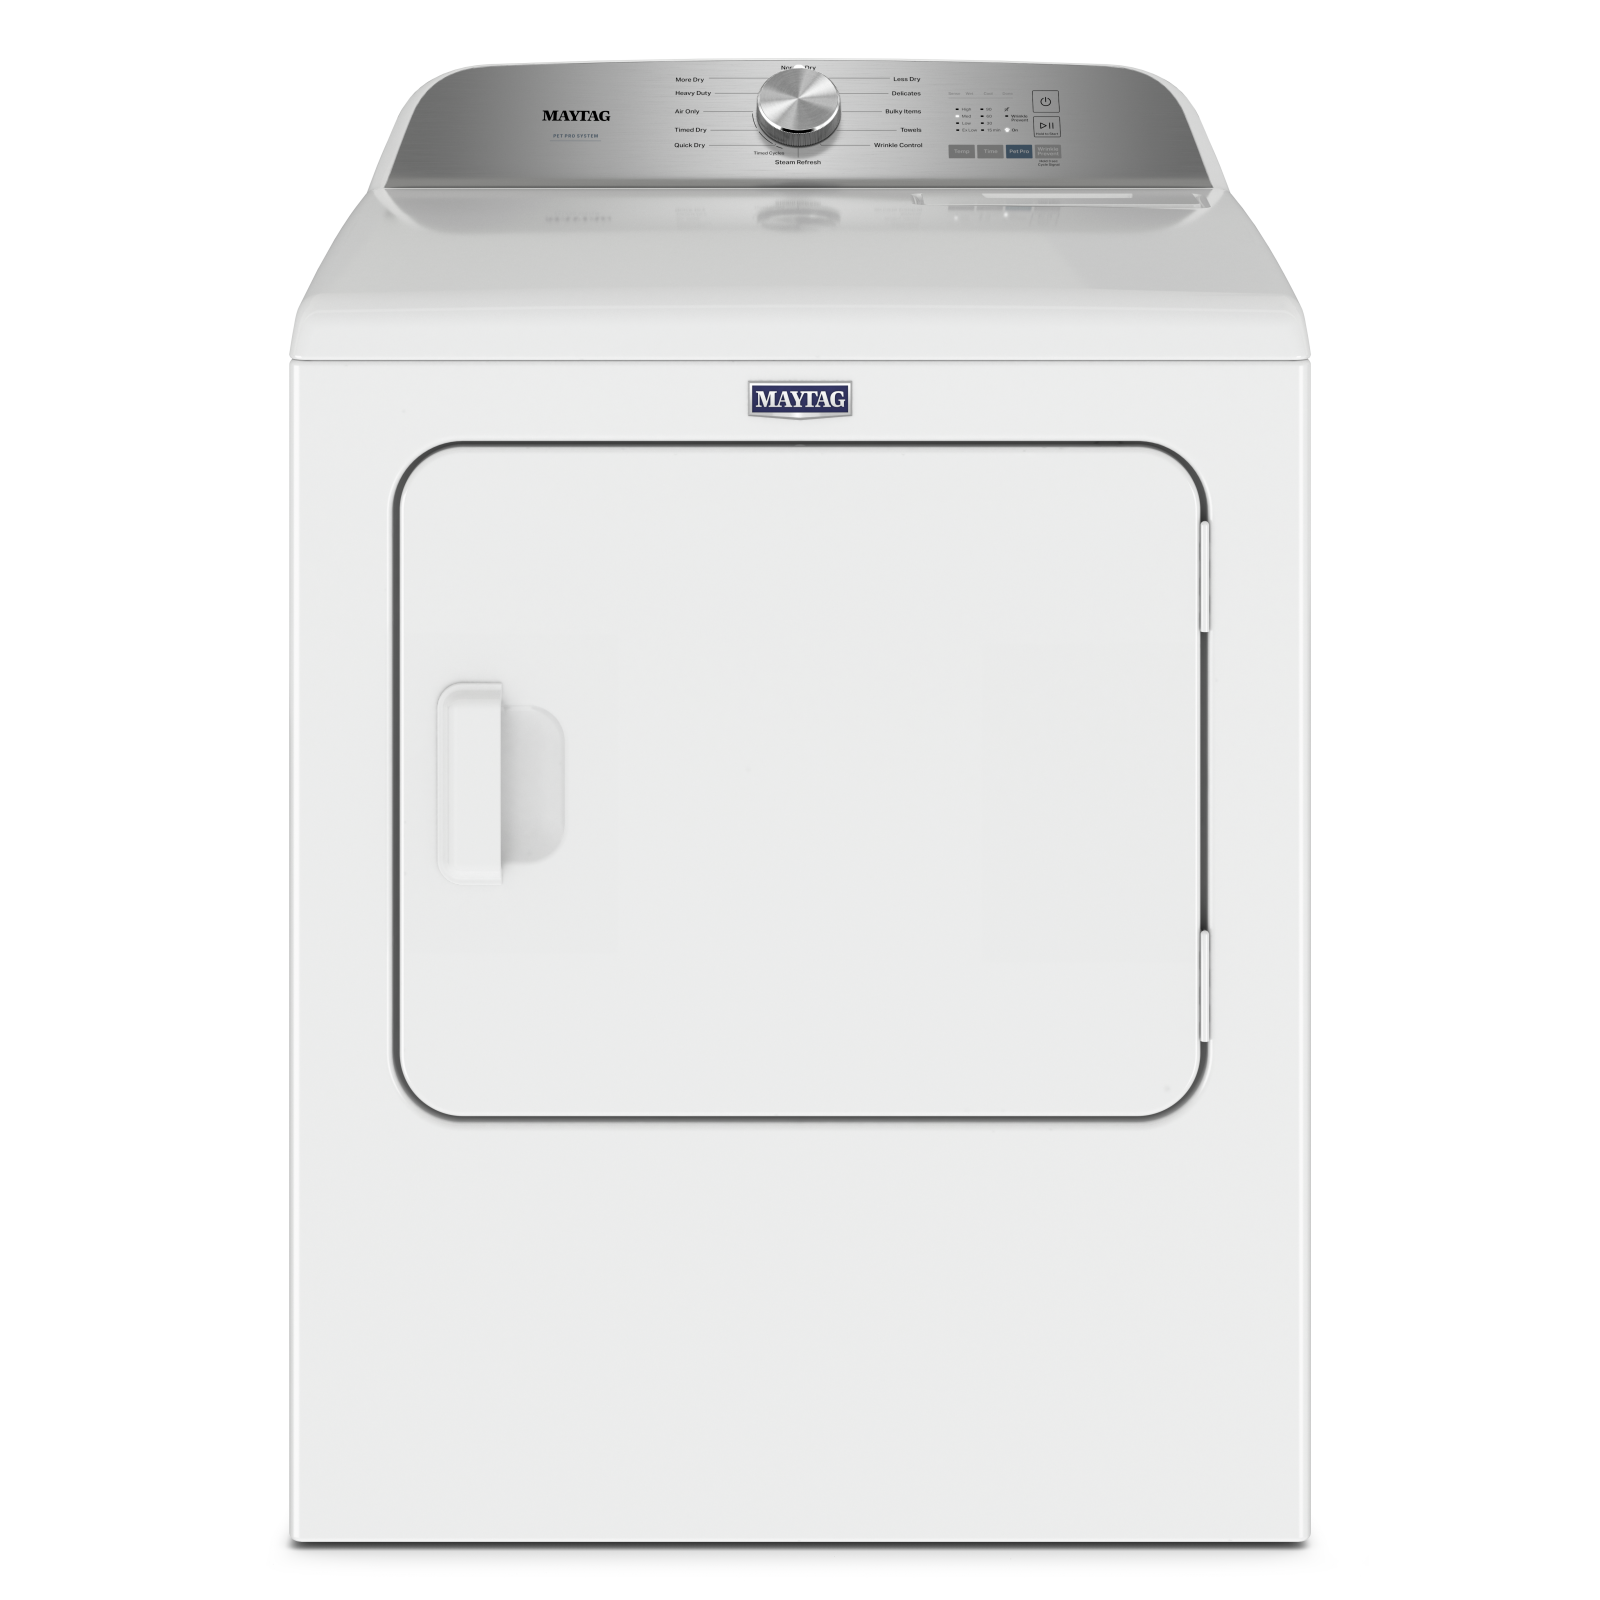 Maytag - 7 cu. Ft  Gas Dryer in White - MGD6500MW